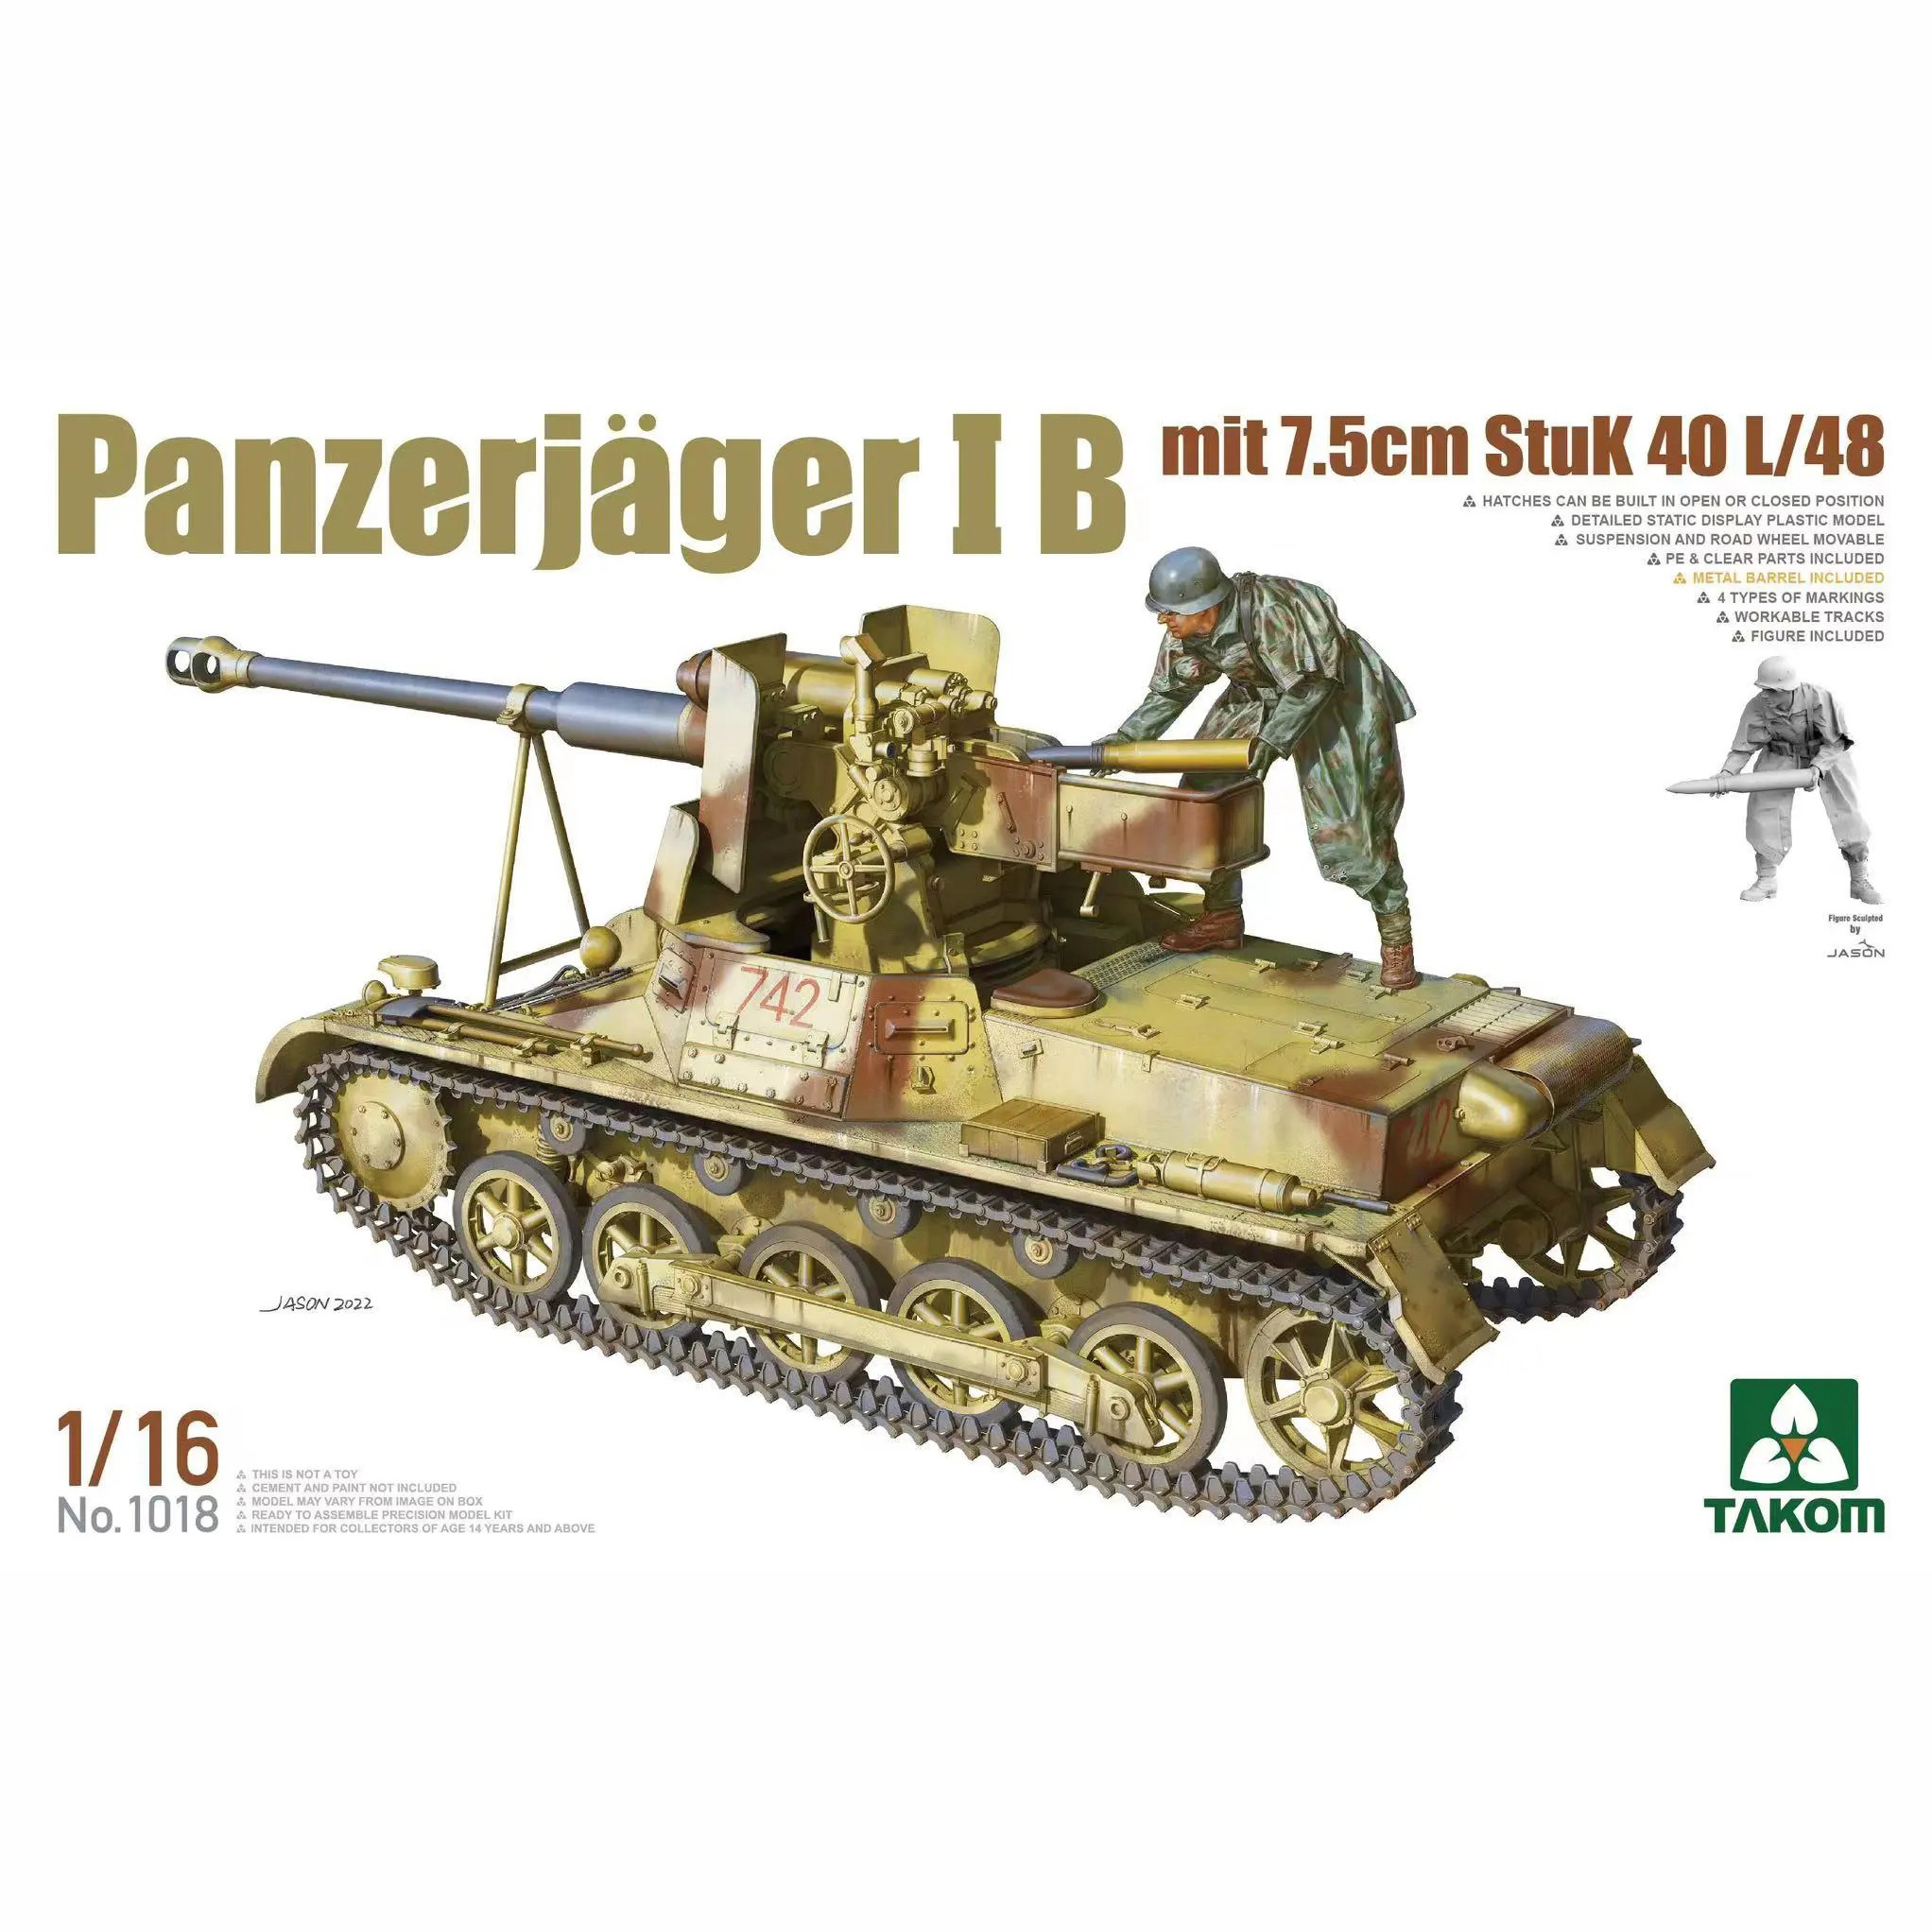 1018 Takom 1/16 Немецкая противотанковая САУ Panzerjäger I B mit 7,5cm StuK 40 L48